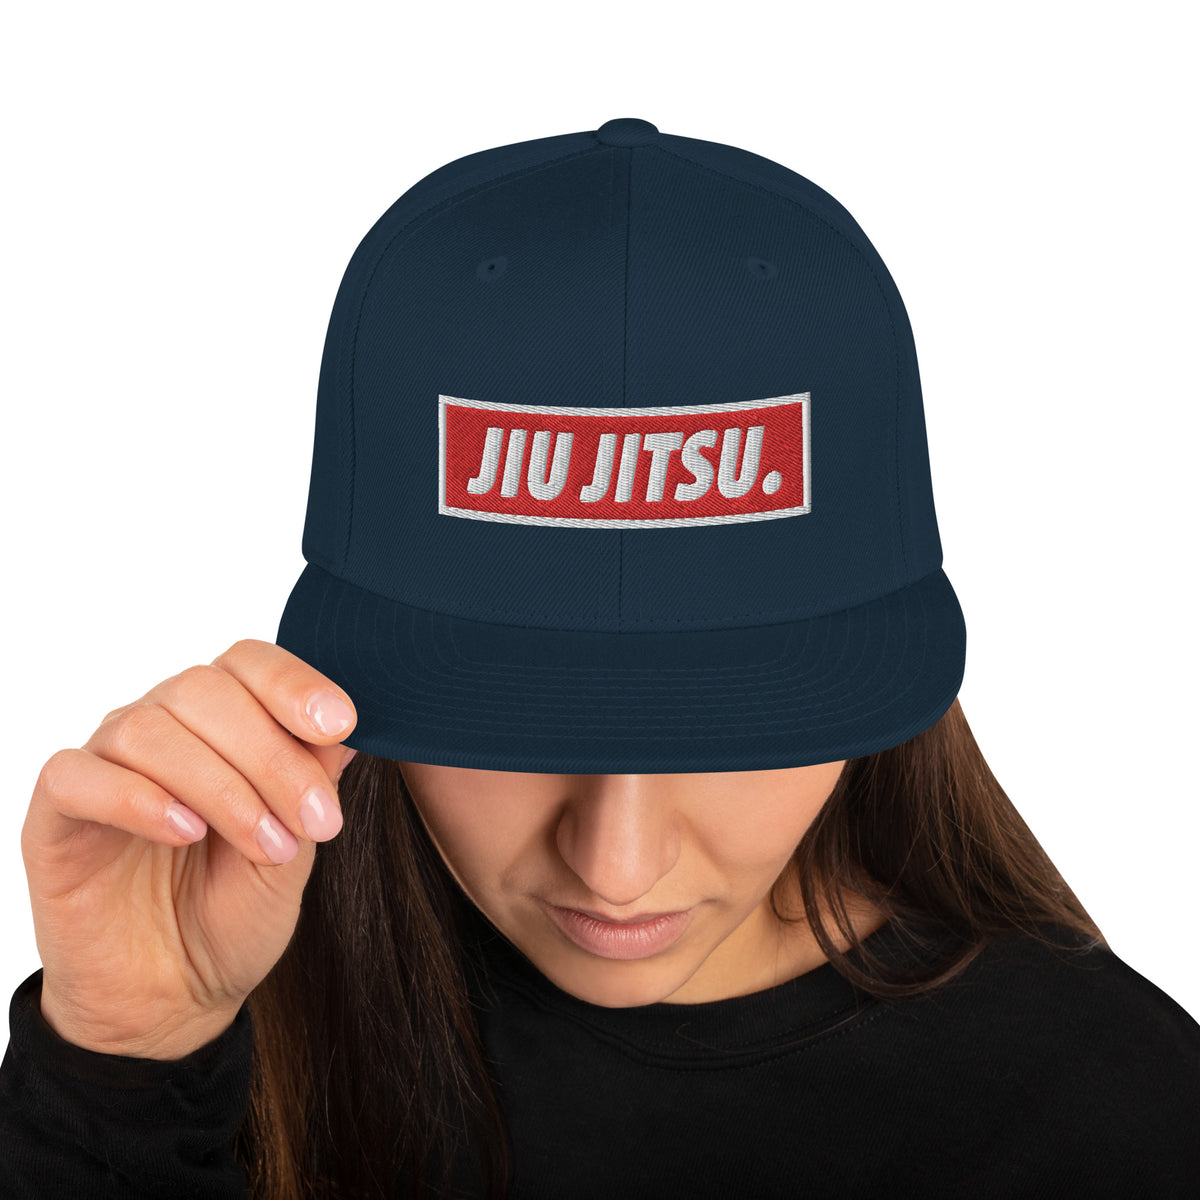 Jiu Jitsu. Embroidery Snapback Hat